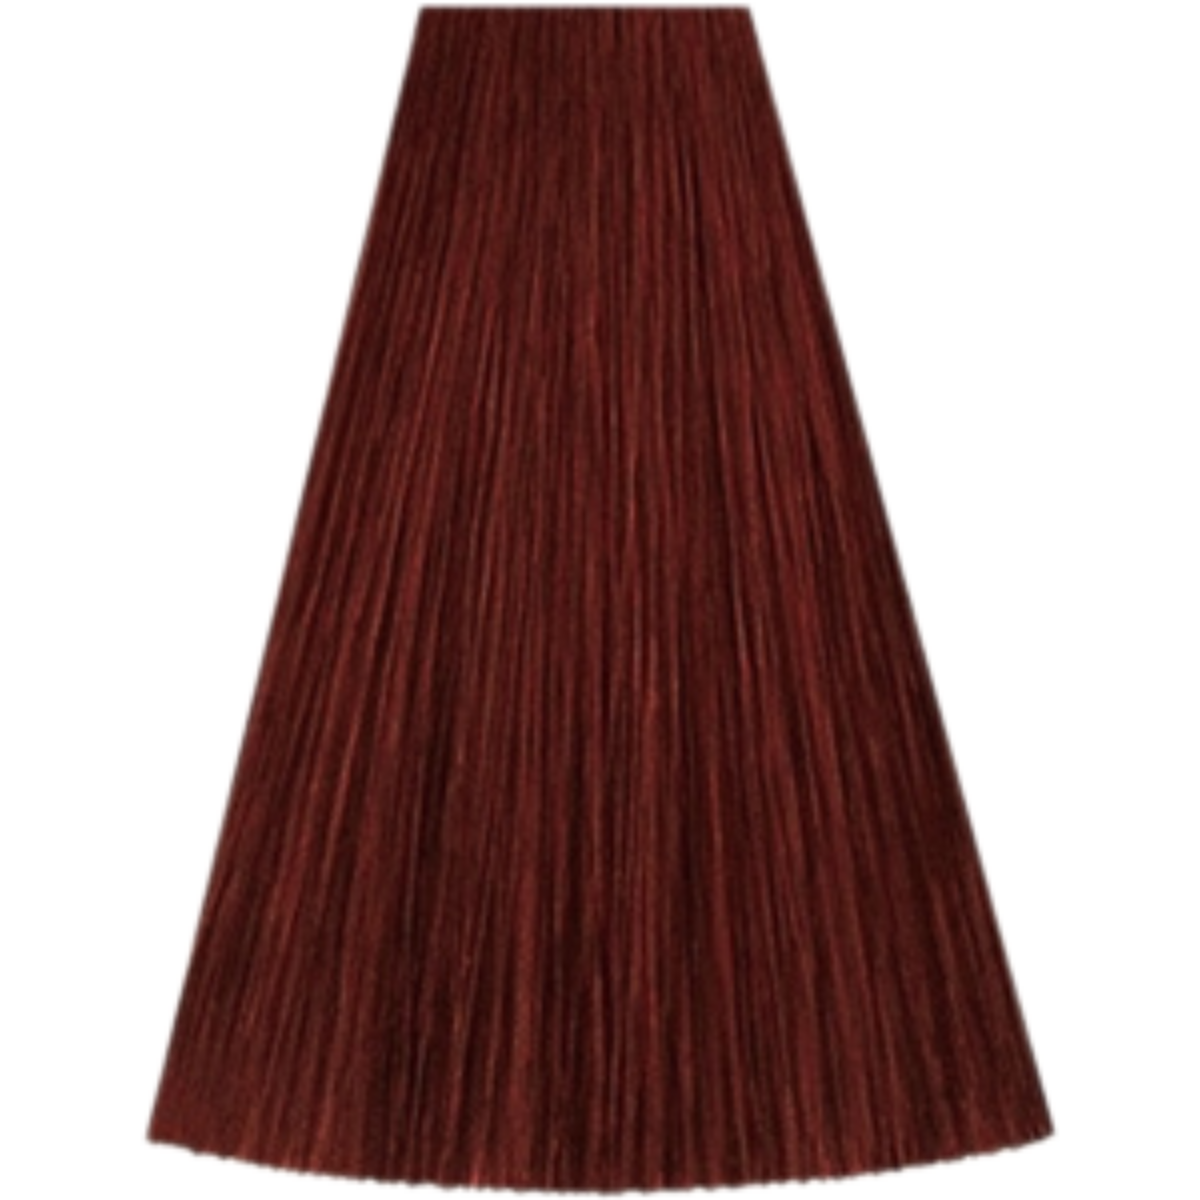 צבע שיער גוון 7/46 MEDIUM BLONDE RED VIOLET קאדוס KADUS צבע לשיער 60 גרם